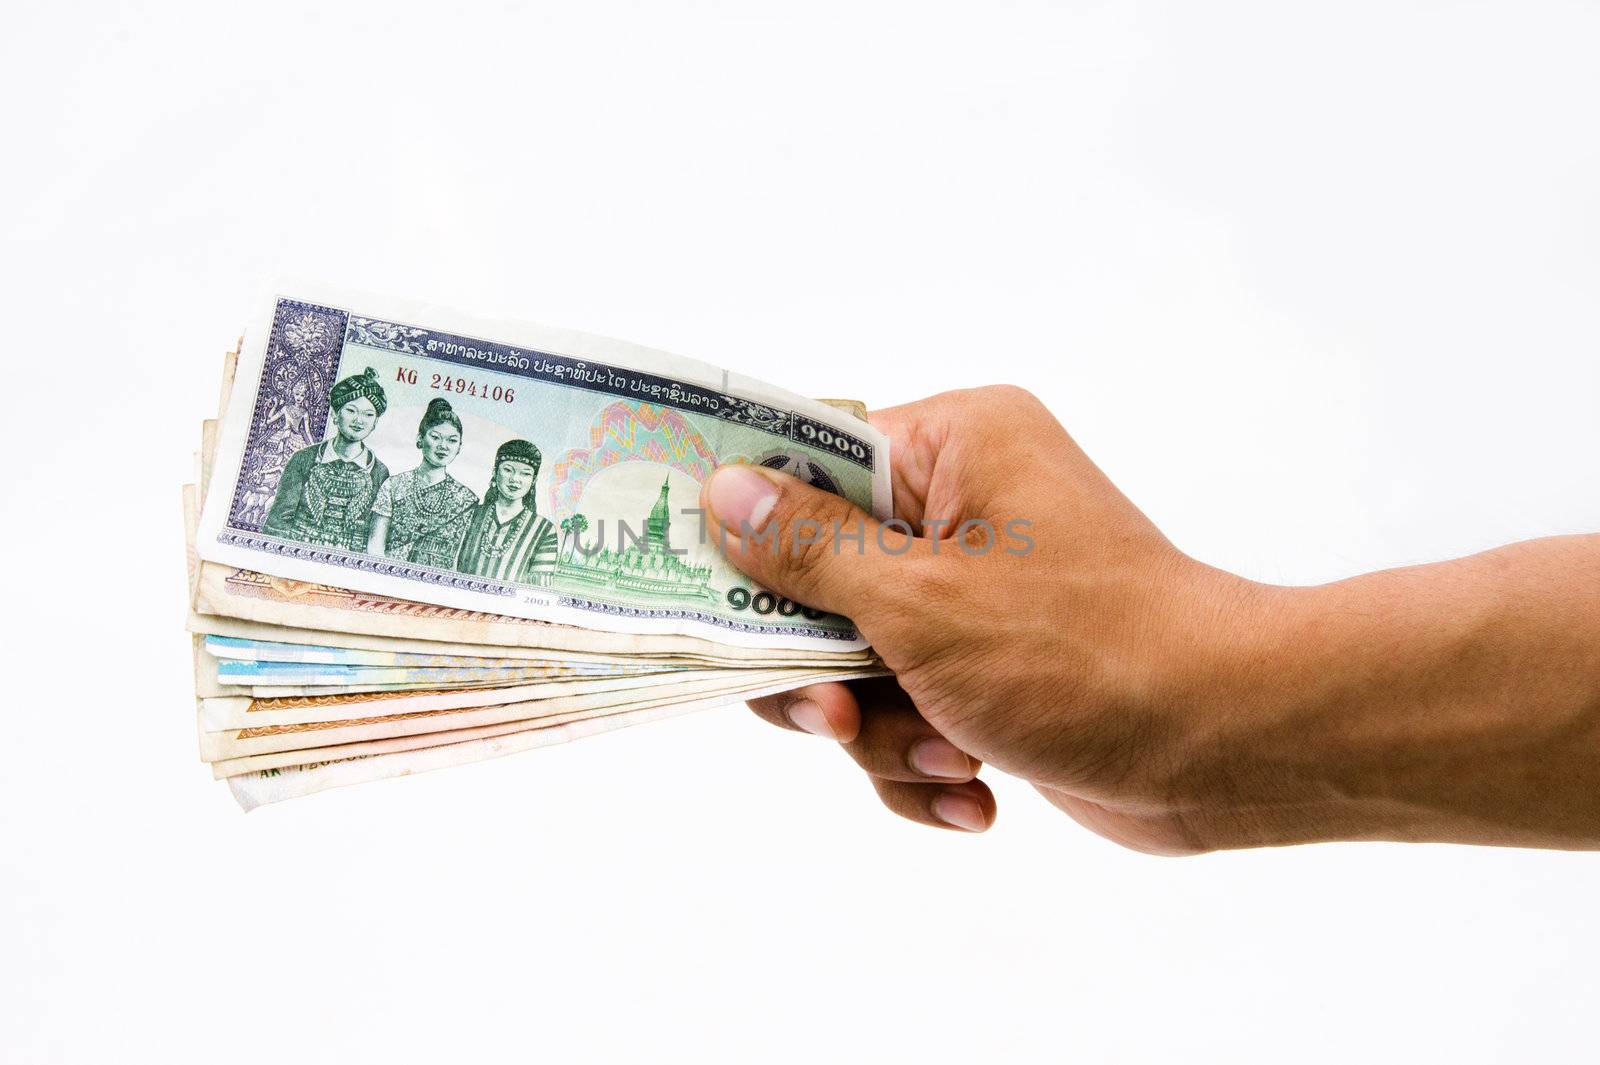 Moneys of Laos. by Noppharat_th